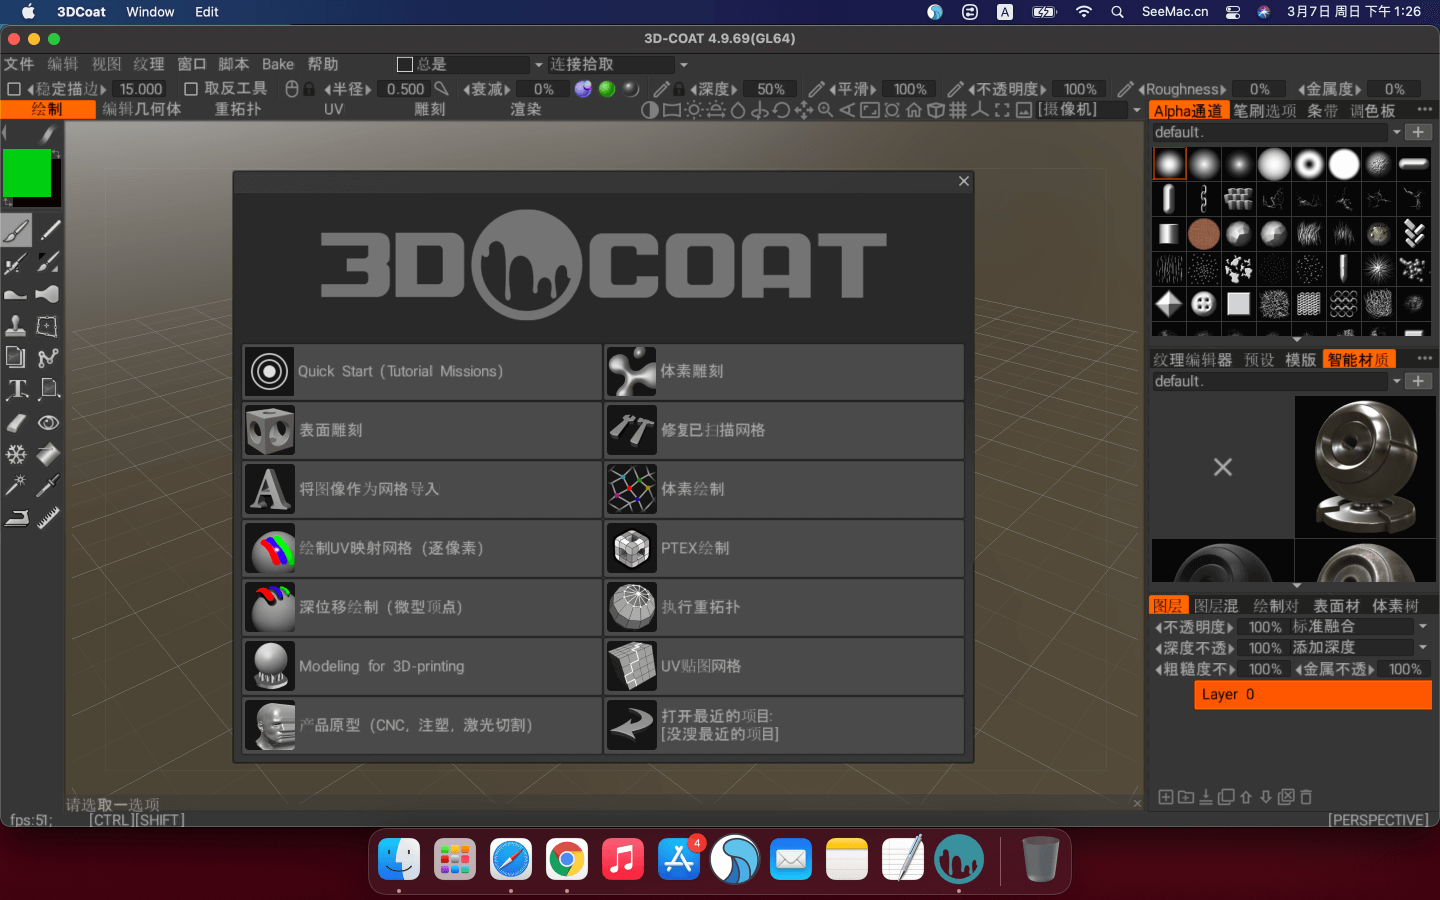 3D Coat 2023.26 download the last version for apple